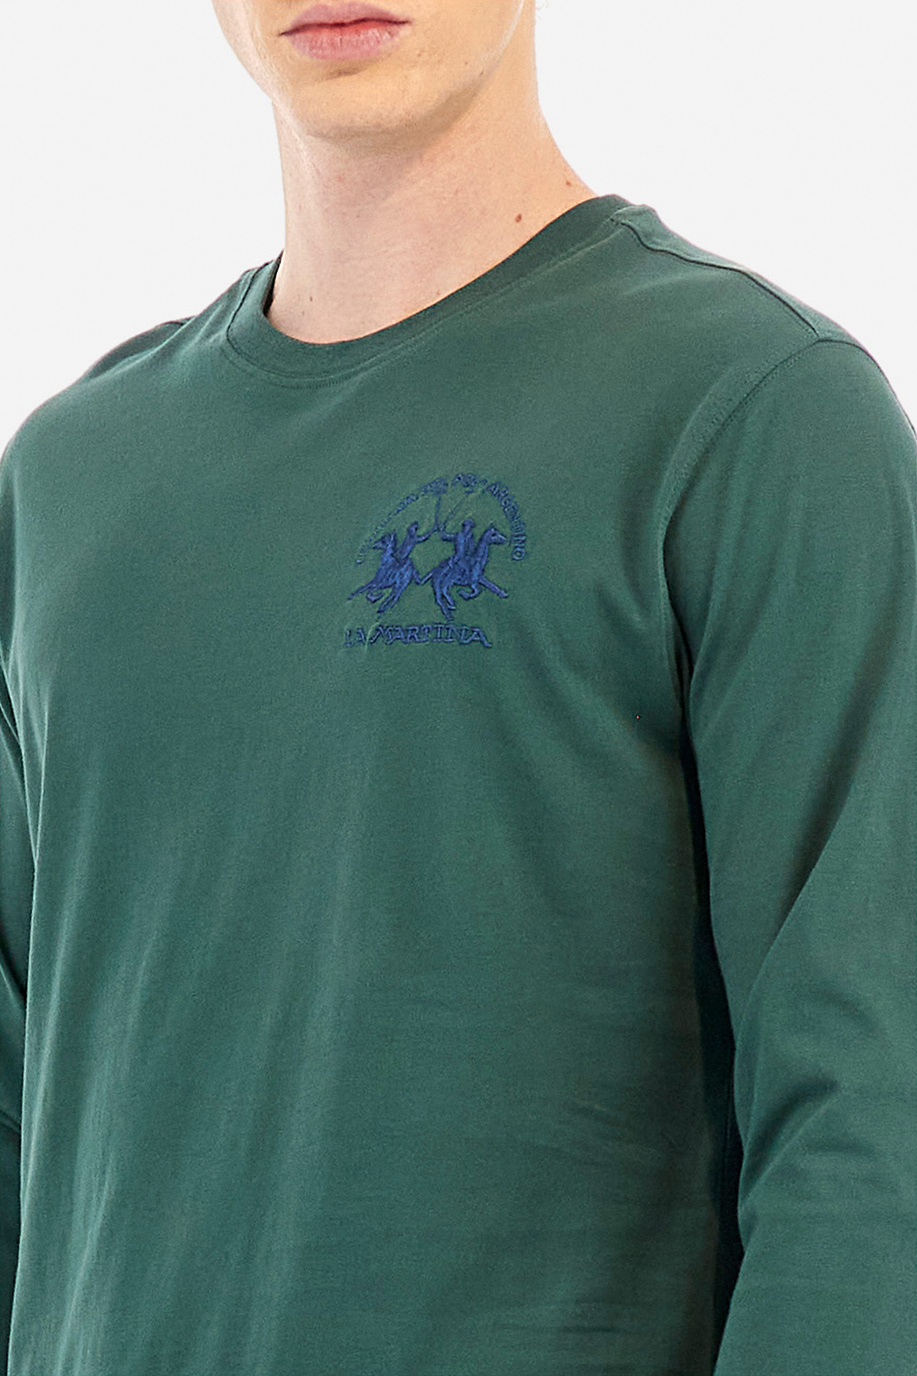 Tee-shirt homme coupe classique - Willey - XL grandes tailles | La Martina - Official Online Shop